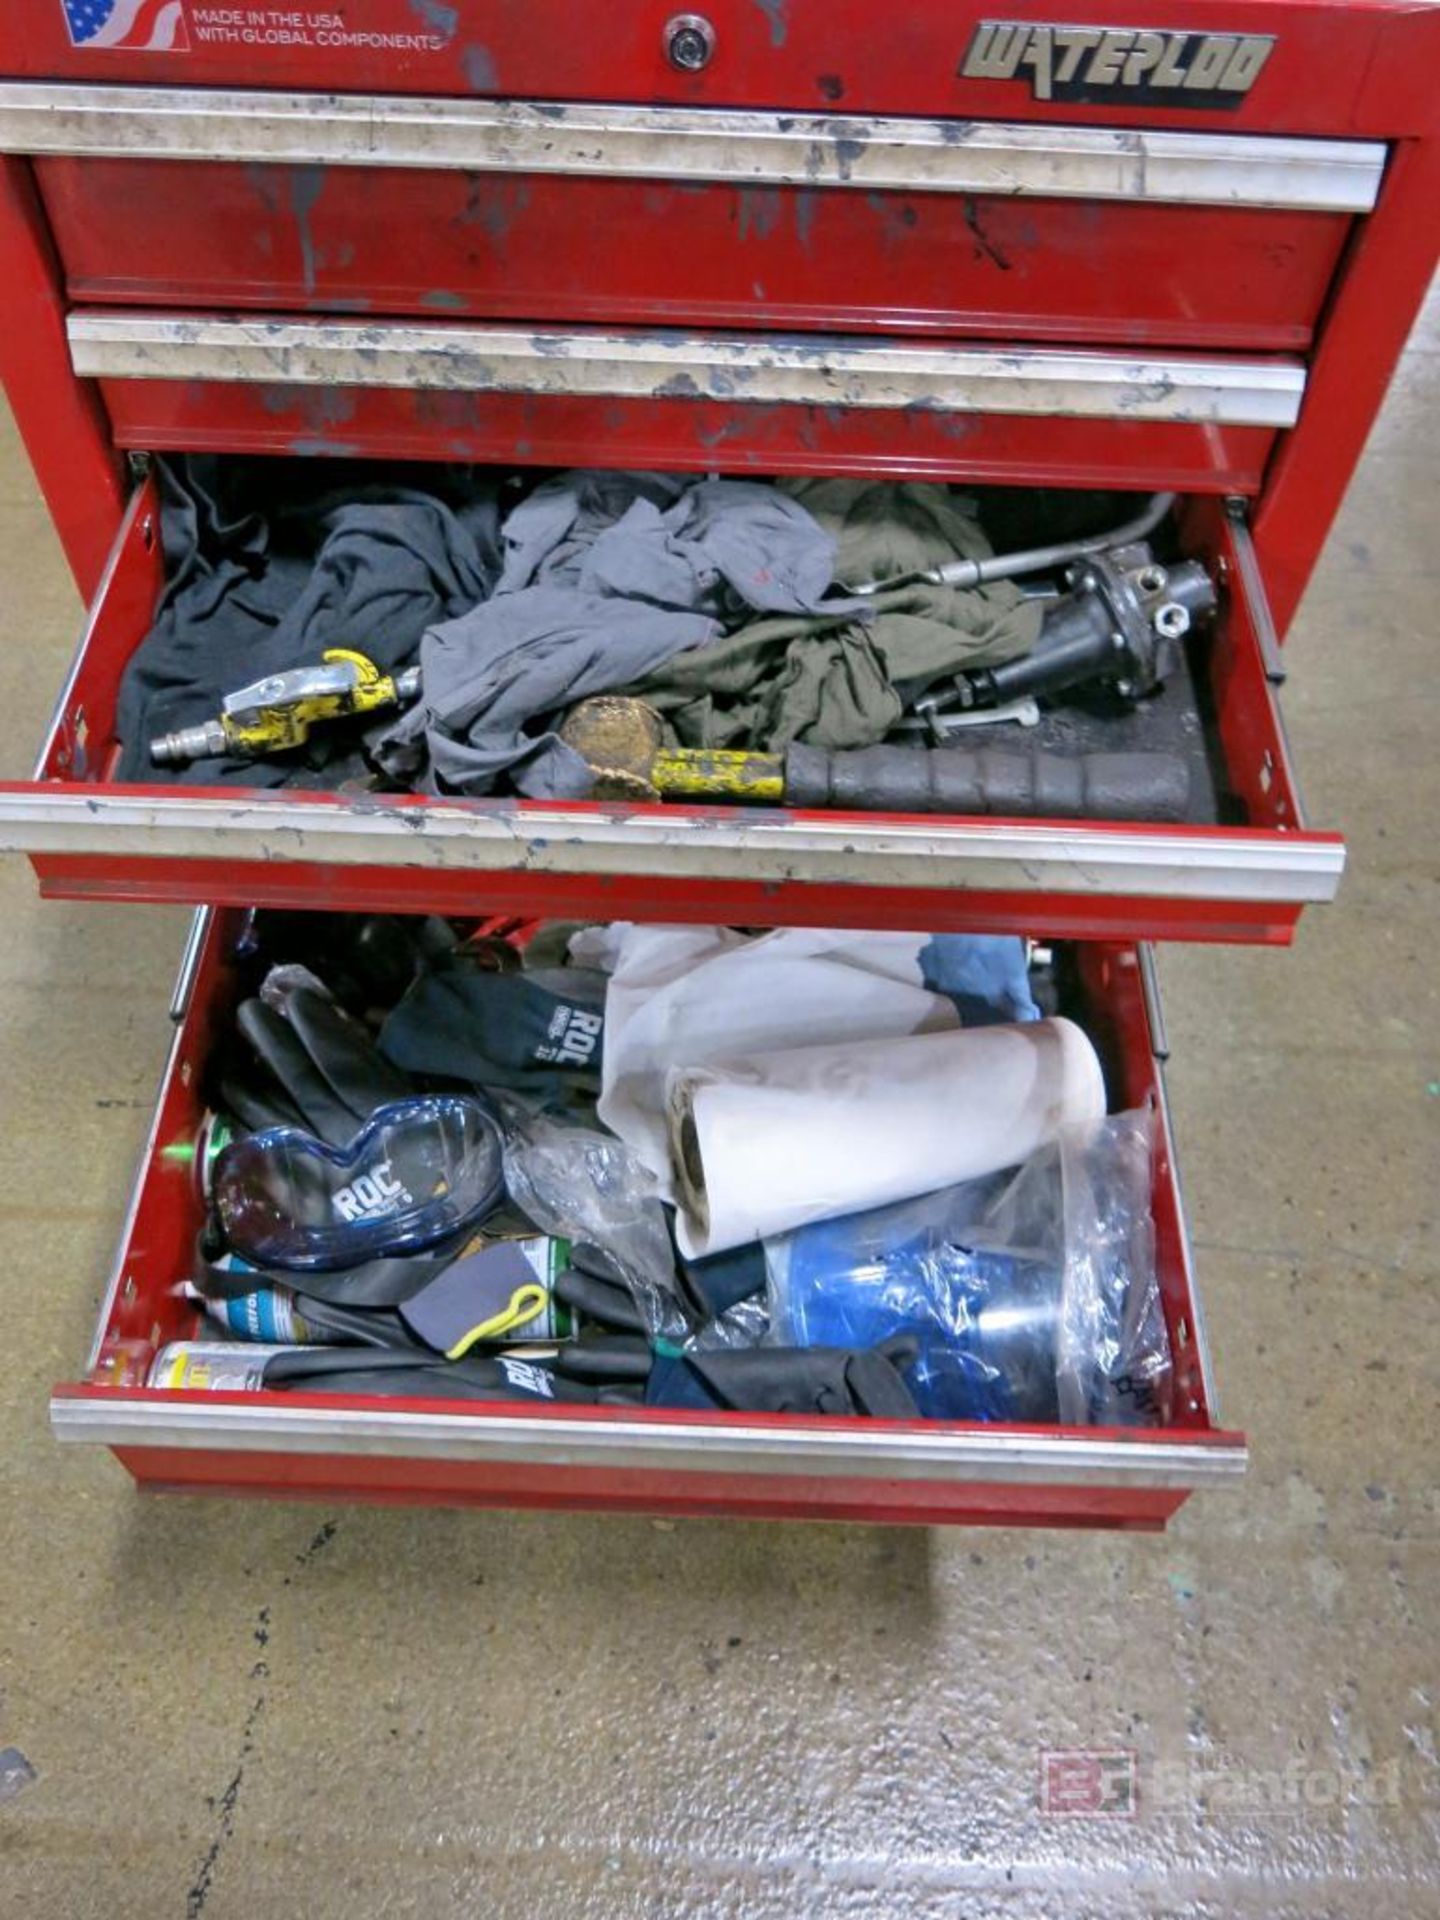 Waterloo 6-Drawer Mechanics Tool Box w/ Contents - Image 2 of 3